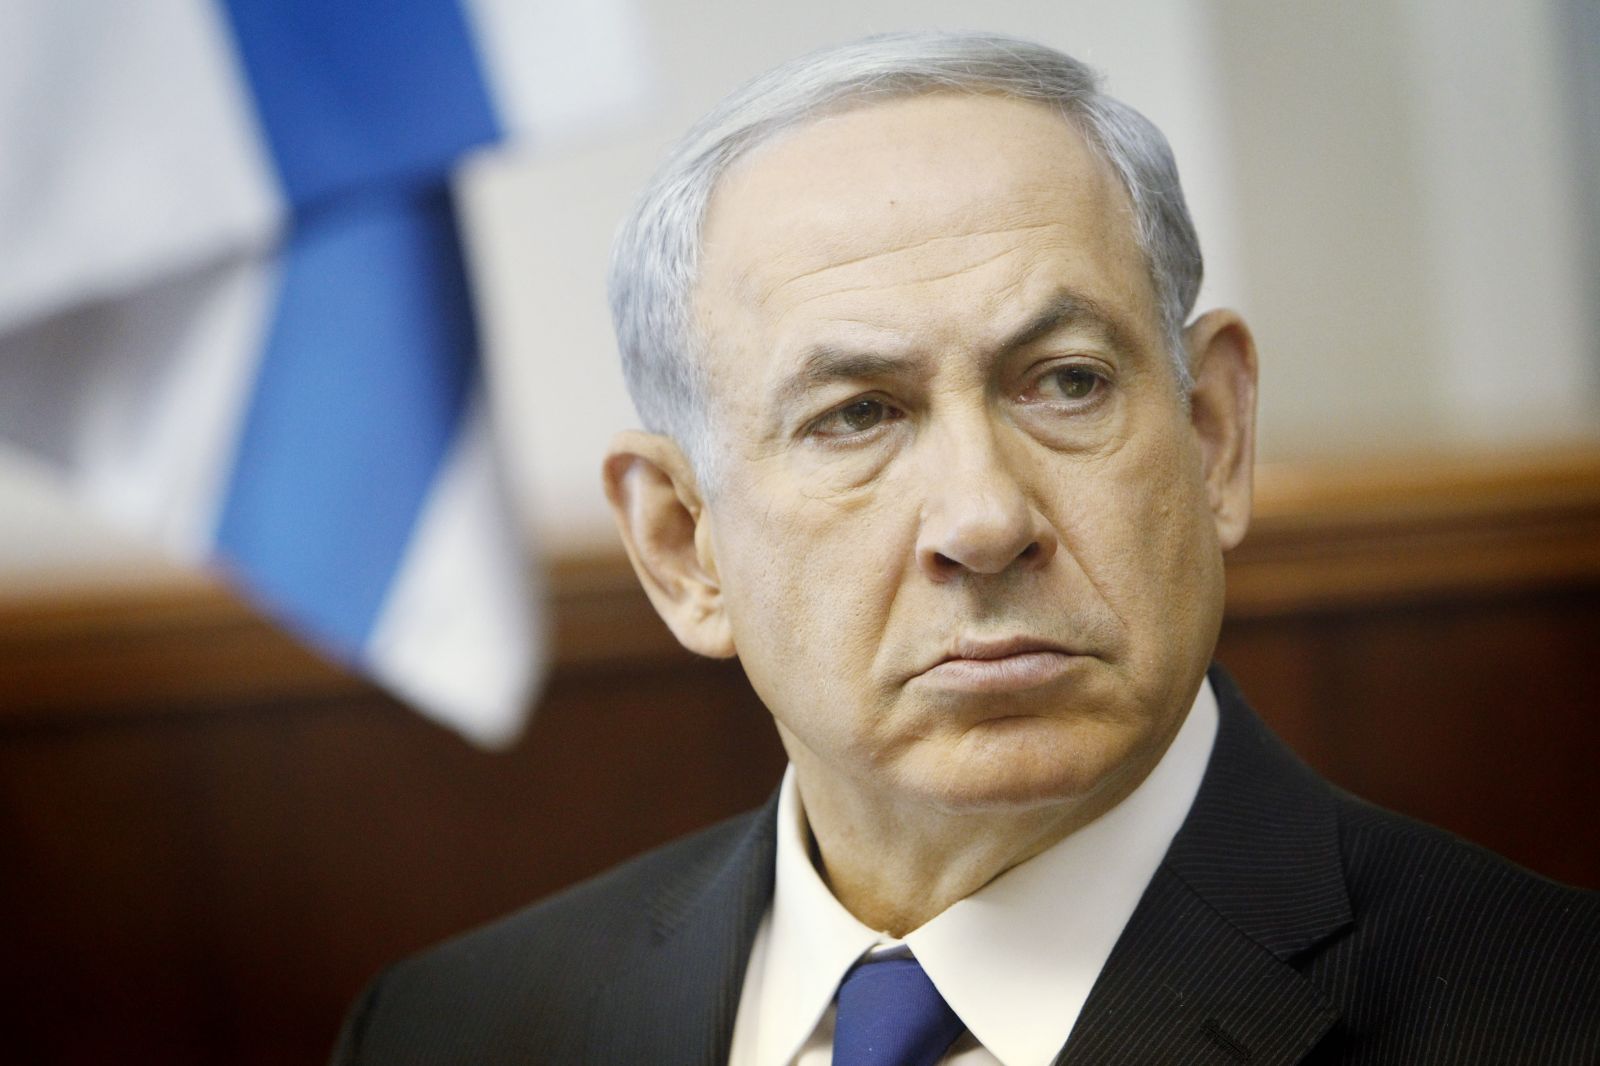 Netanyahu slams deputy for 'offensive' remarks towards US Jews